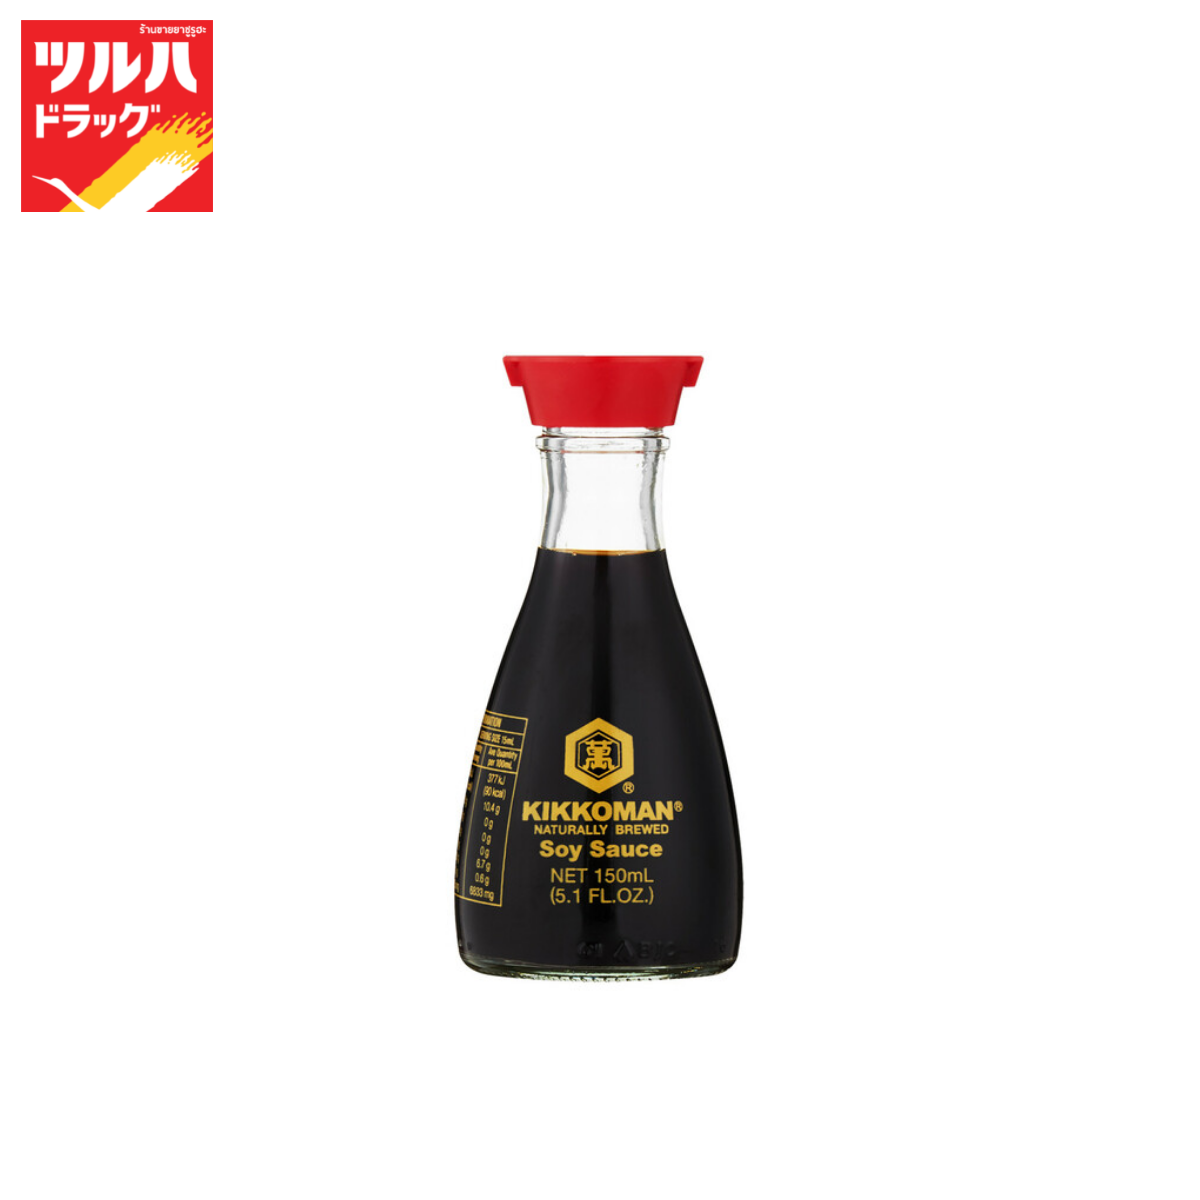 Kikkoman Soy Sauce Table Bottle 150ml. / คิคโคแมน ซอสถั่วเหลือง แบบตั้งโต๊ะ 150มล.